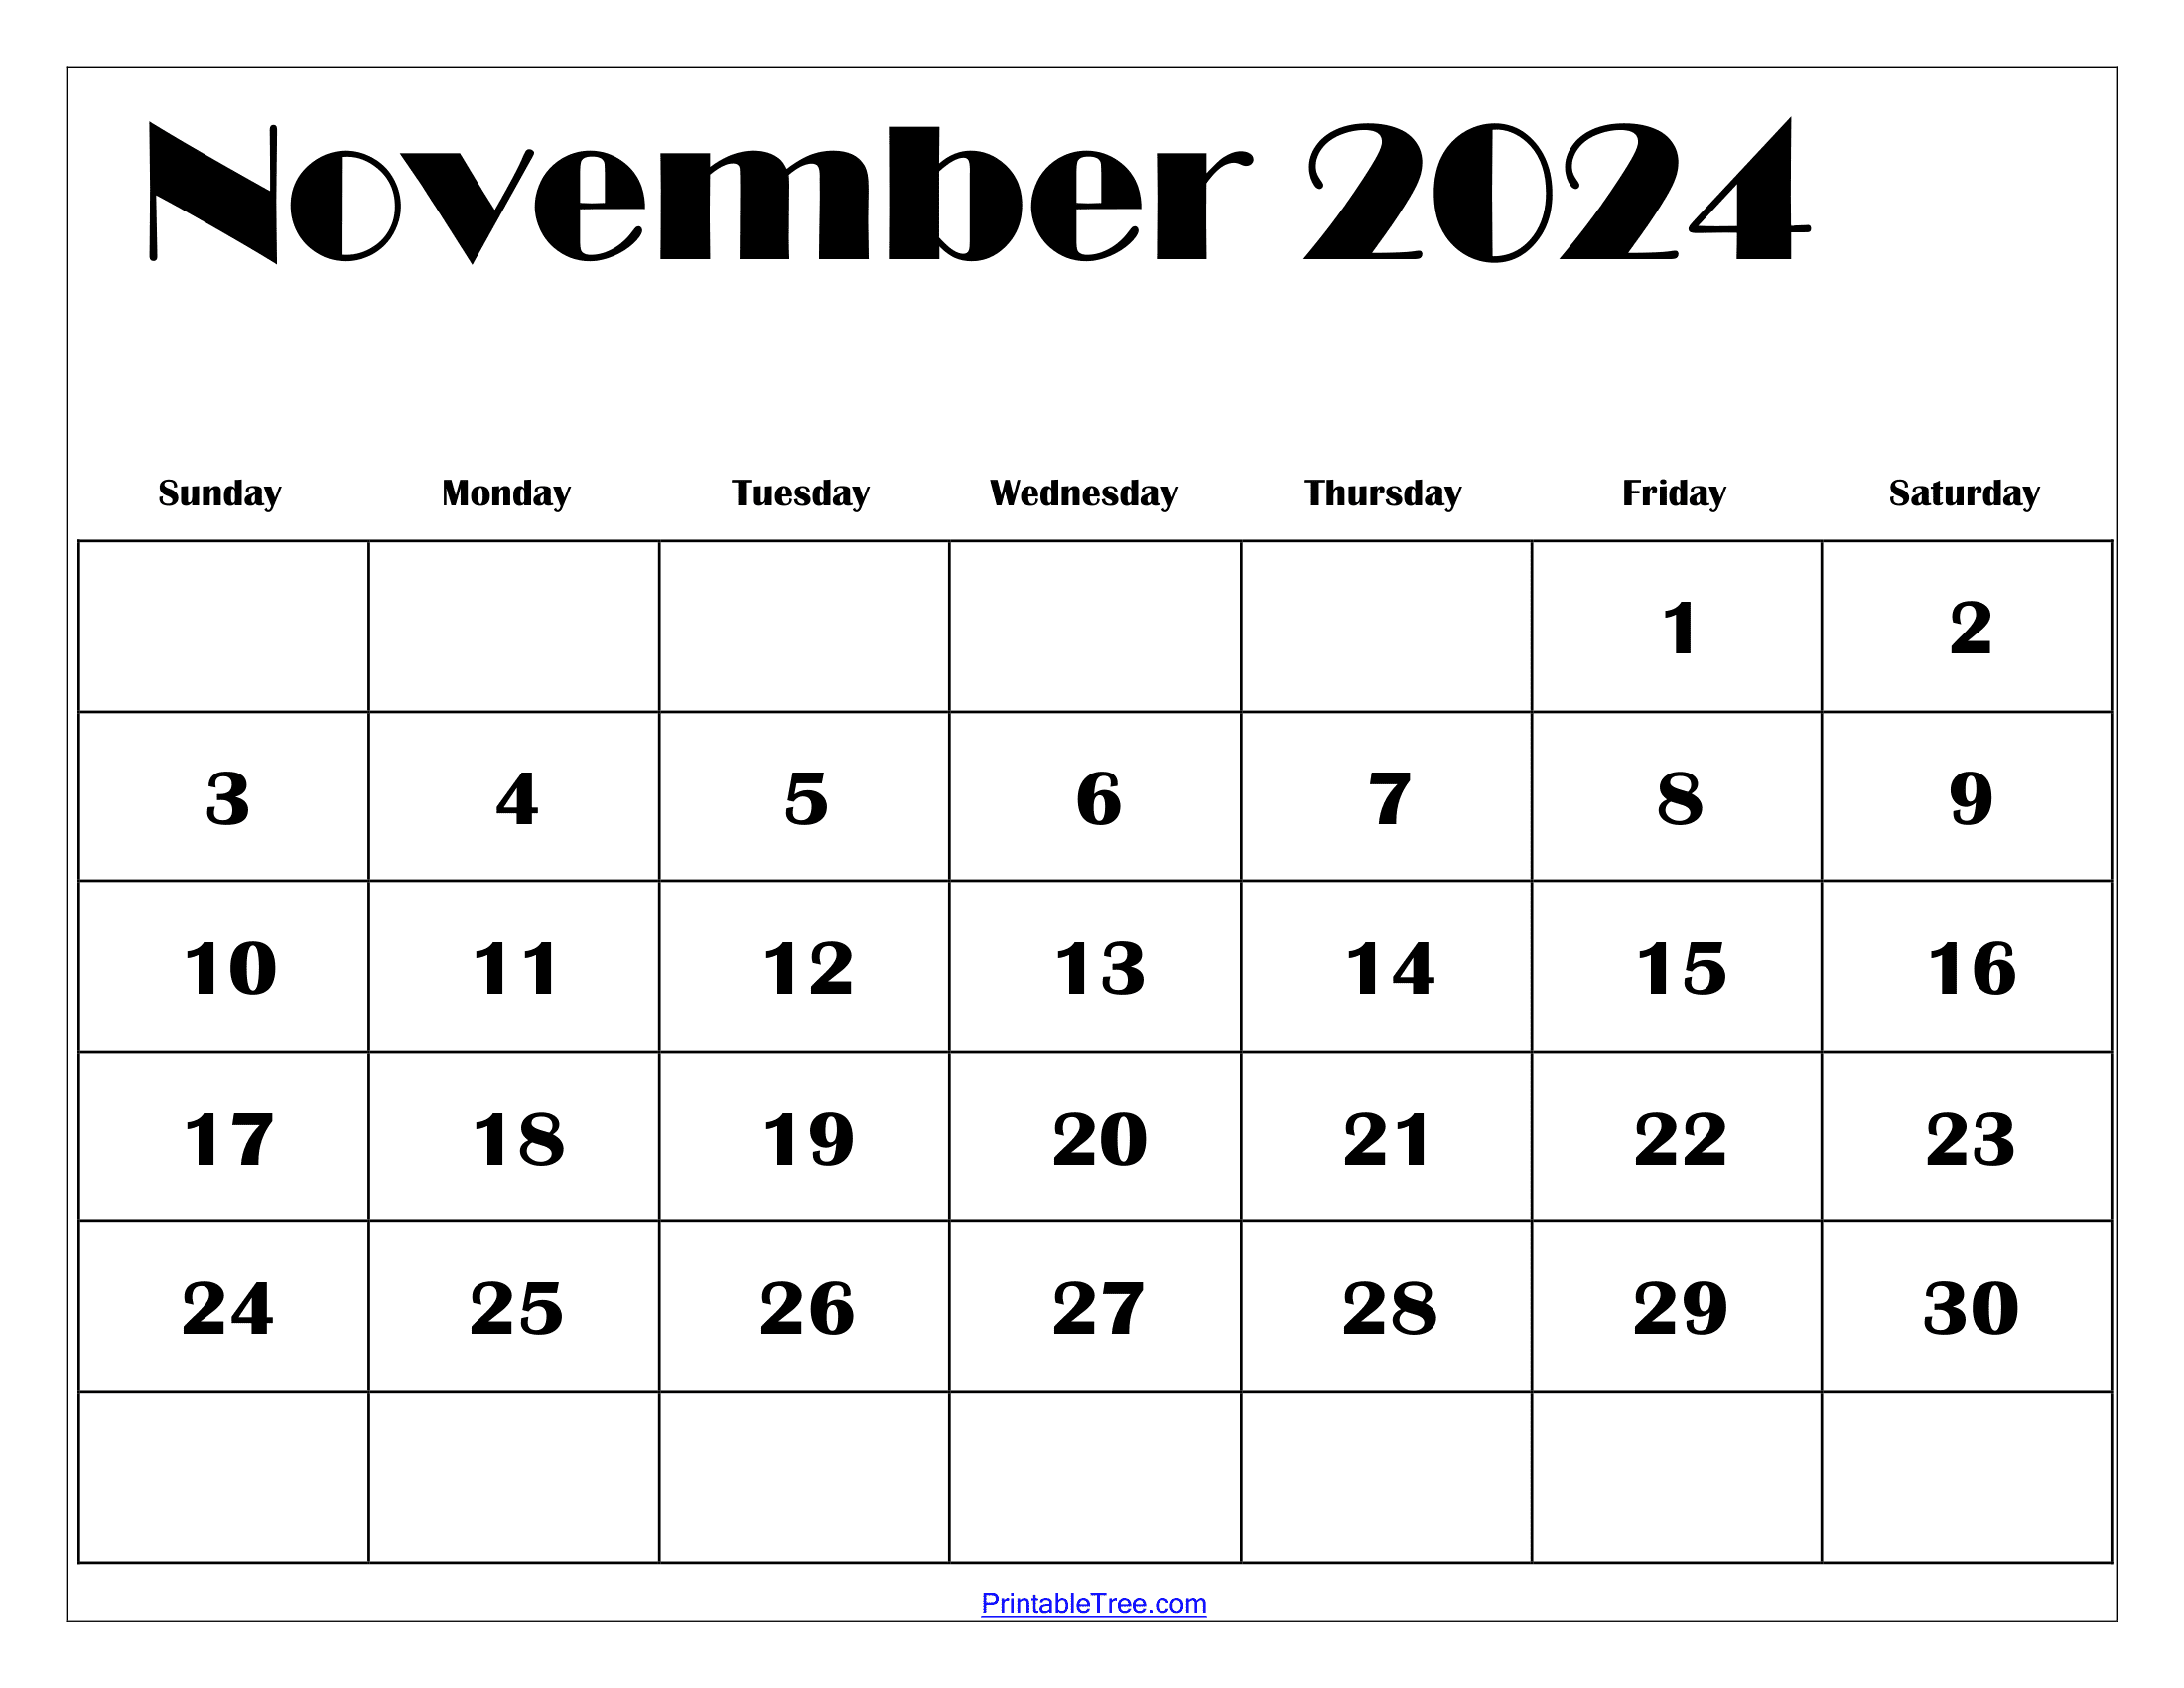 November 2024 Calendar Printable Pdf Template With Holidays for Free Printable Calendar 2024 October And November